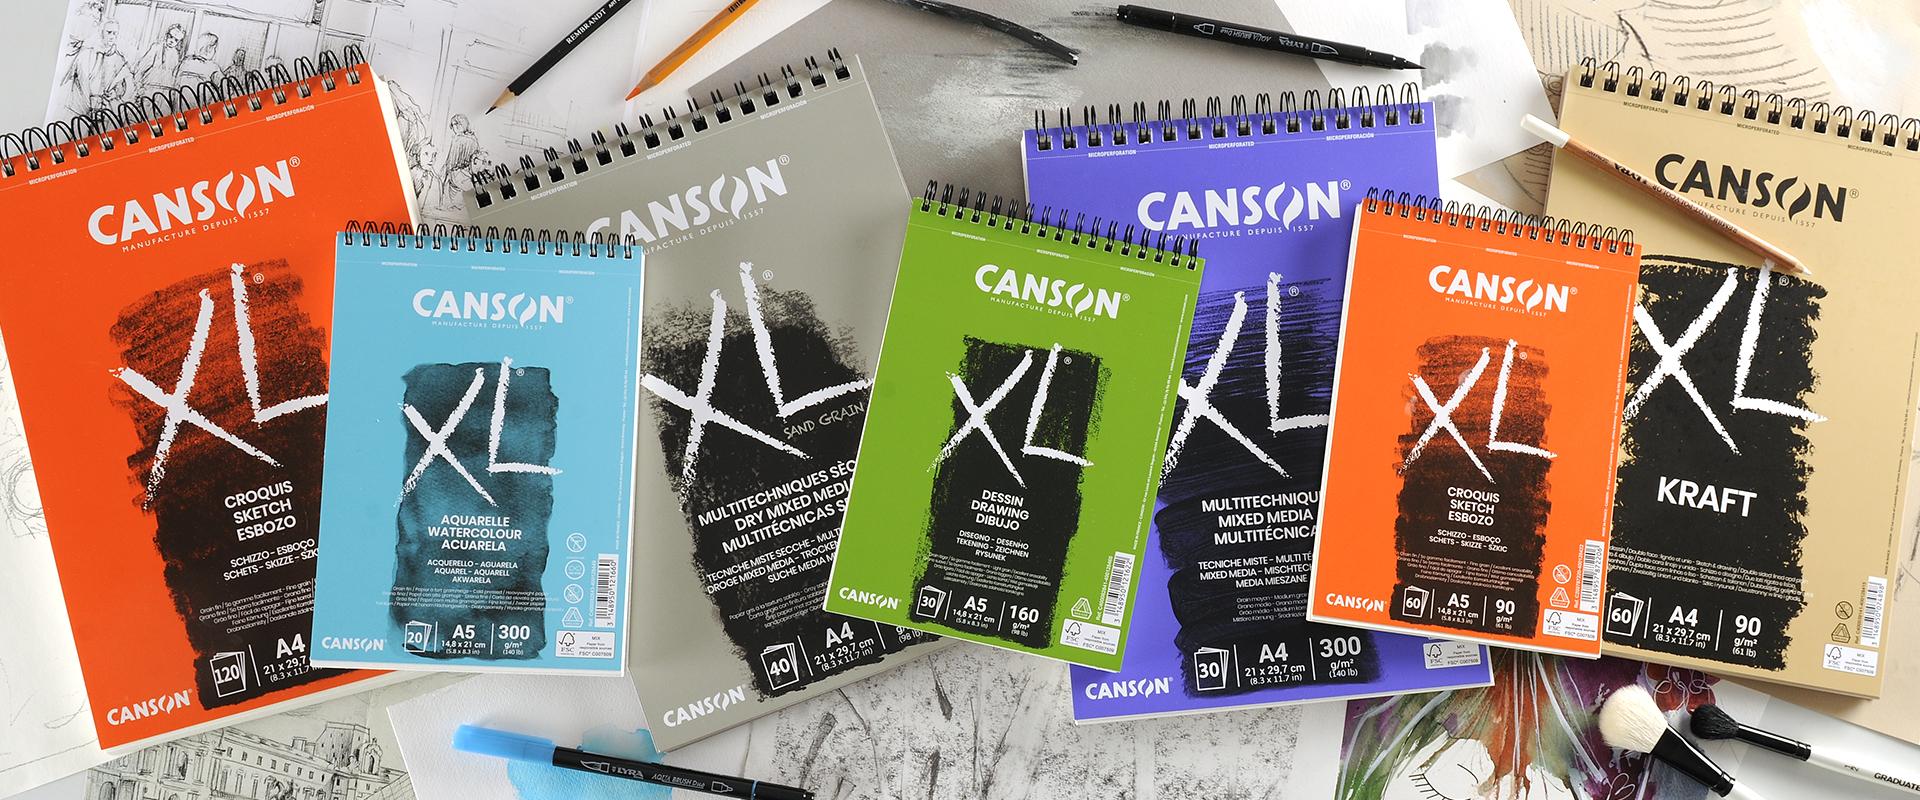 日本販売品 CANSON XL Series Drawing， 11 x 14 by Canson 画材用紙